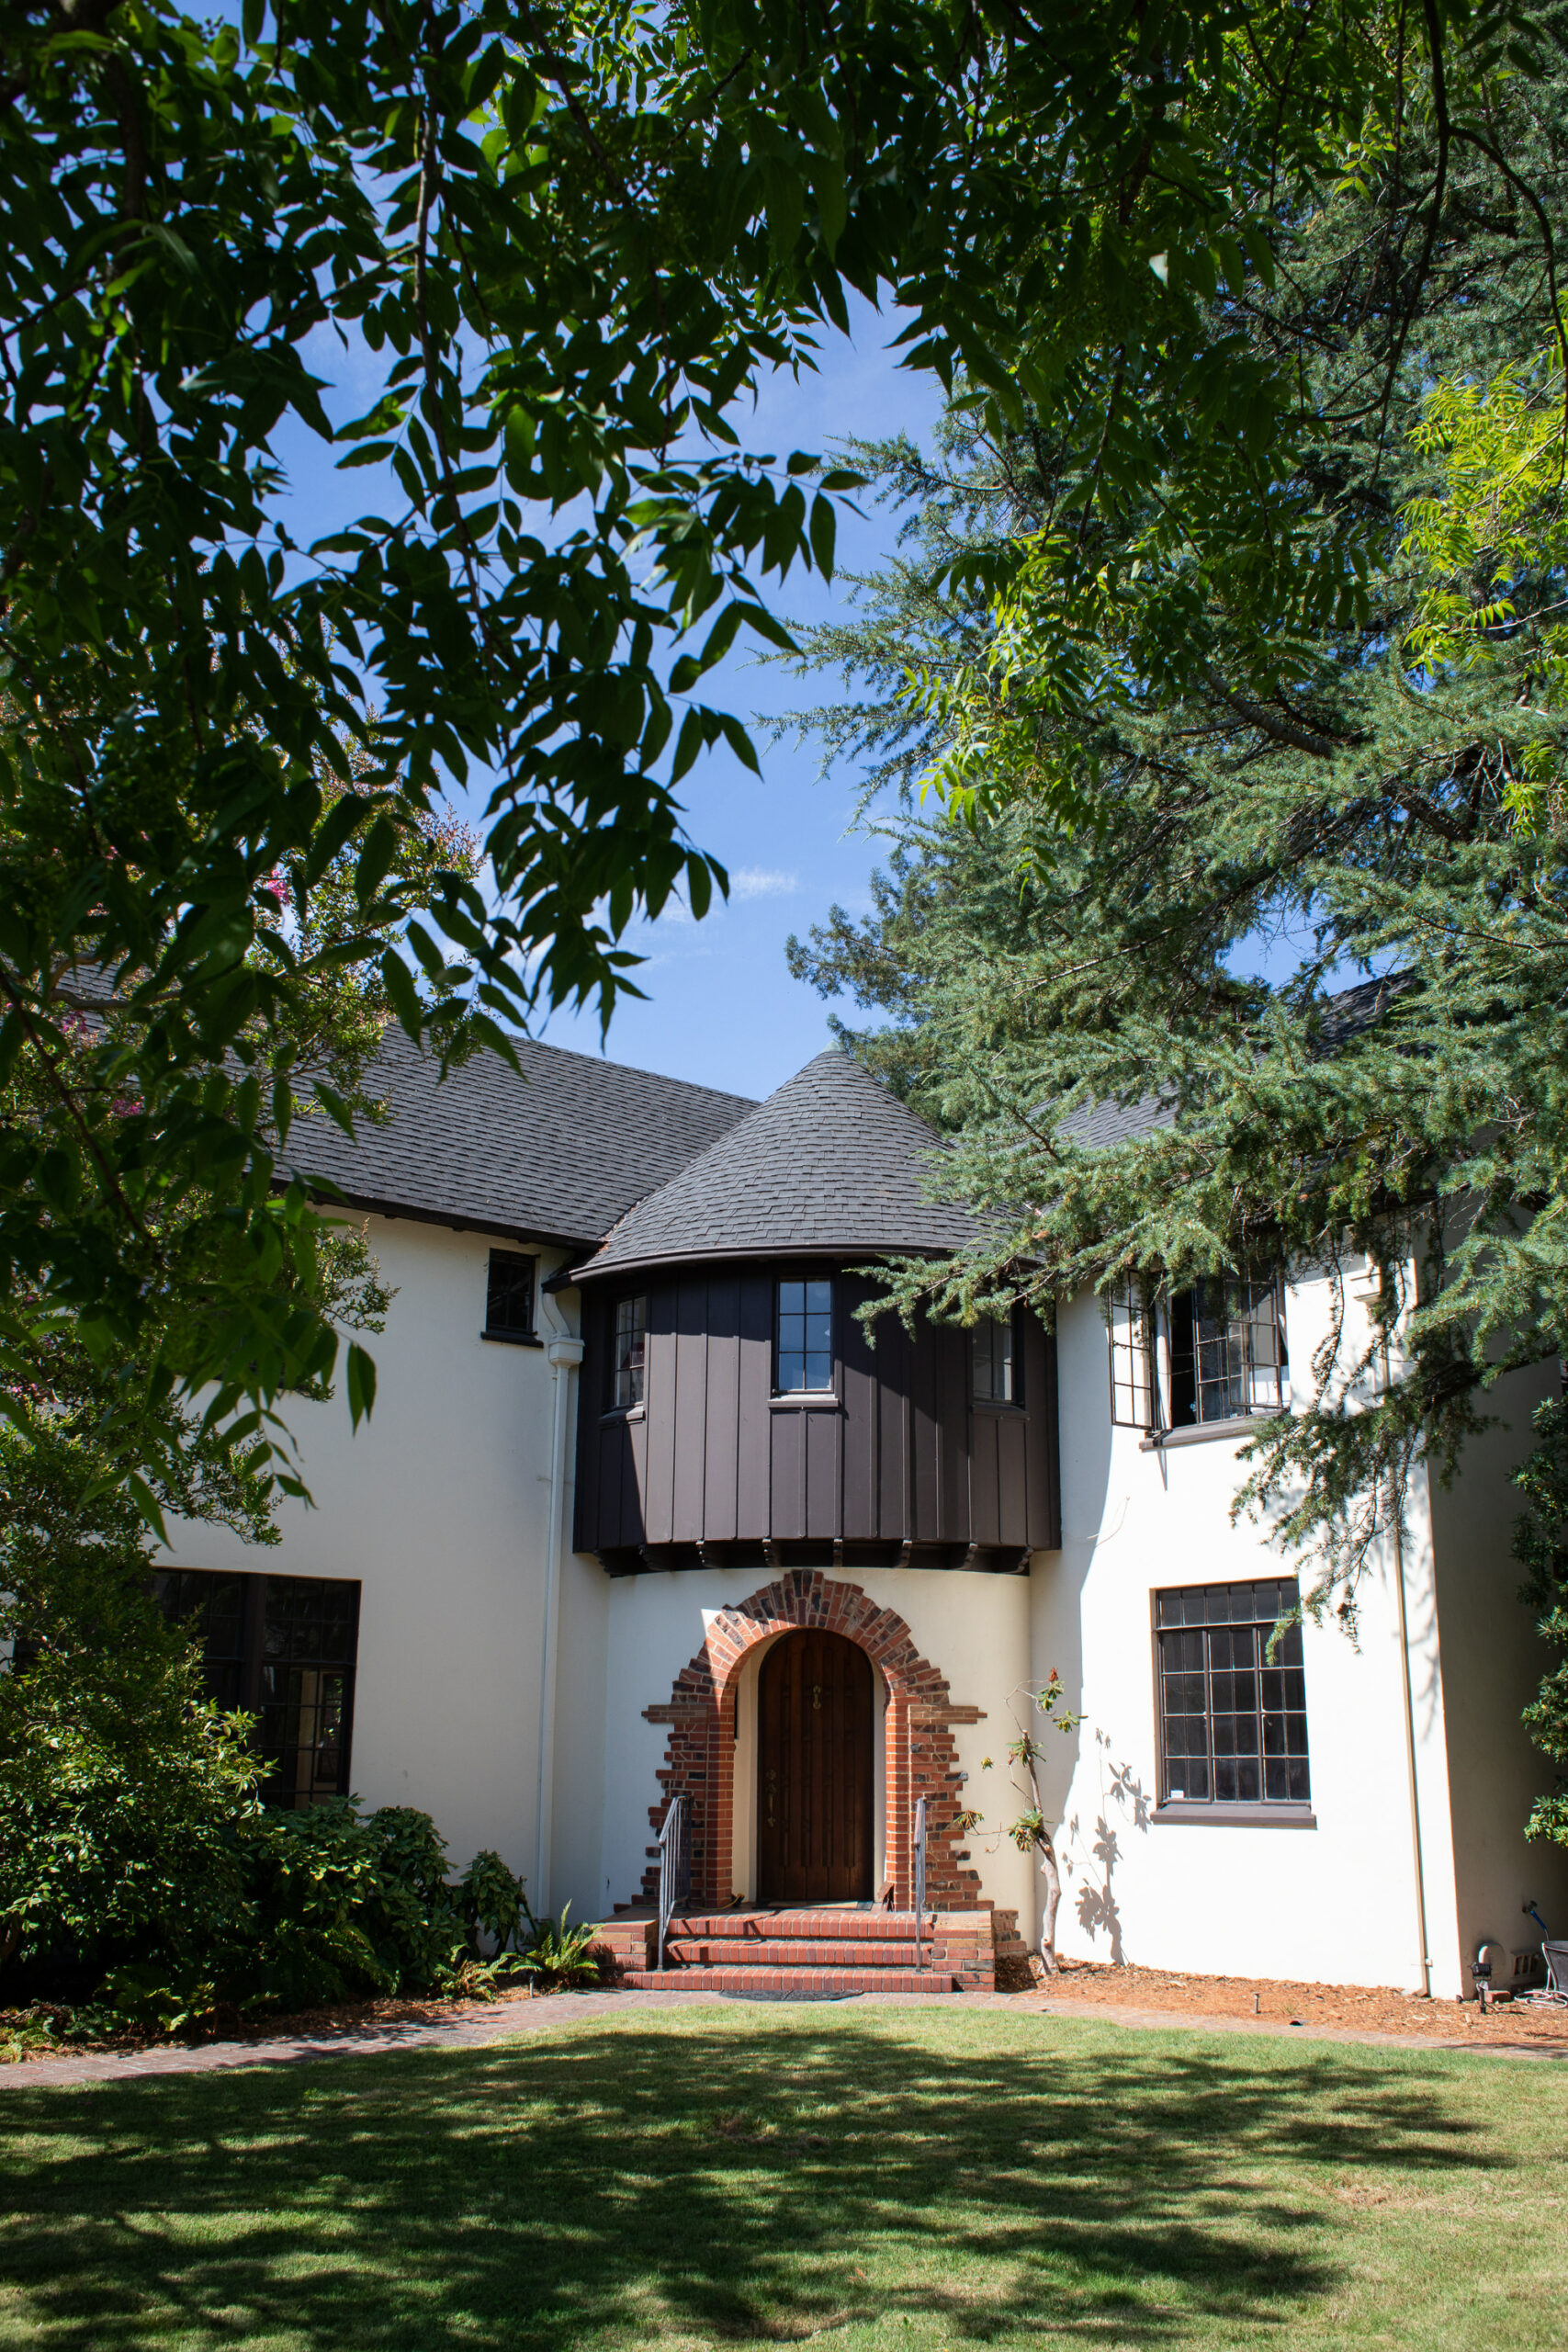 The Sanders home in the McDonald Avenue neighborhood in Santa Rosa. (Eileen Roche)